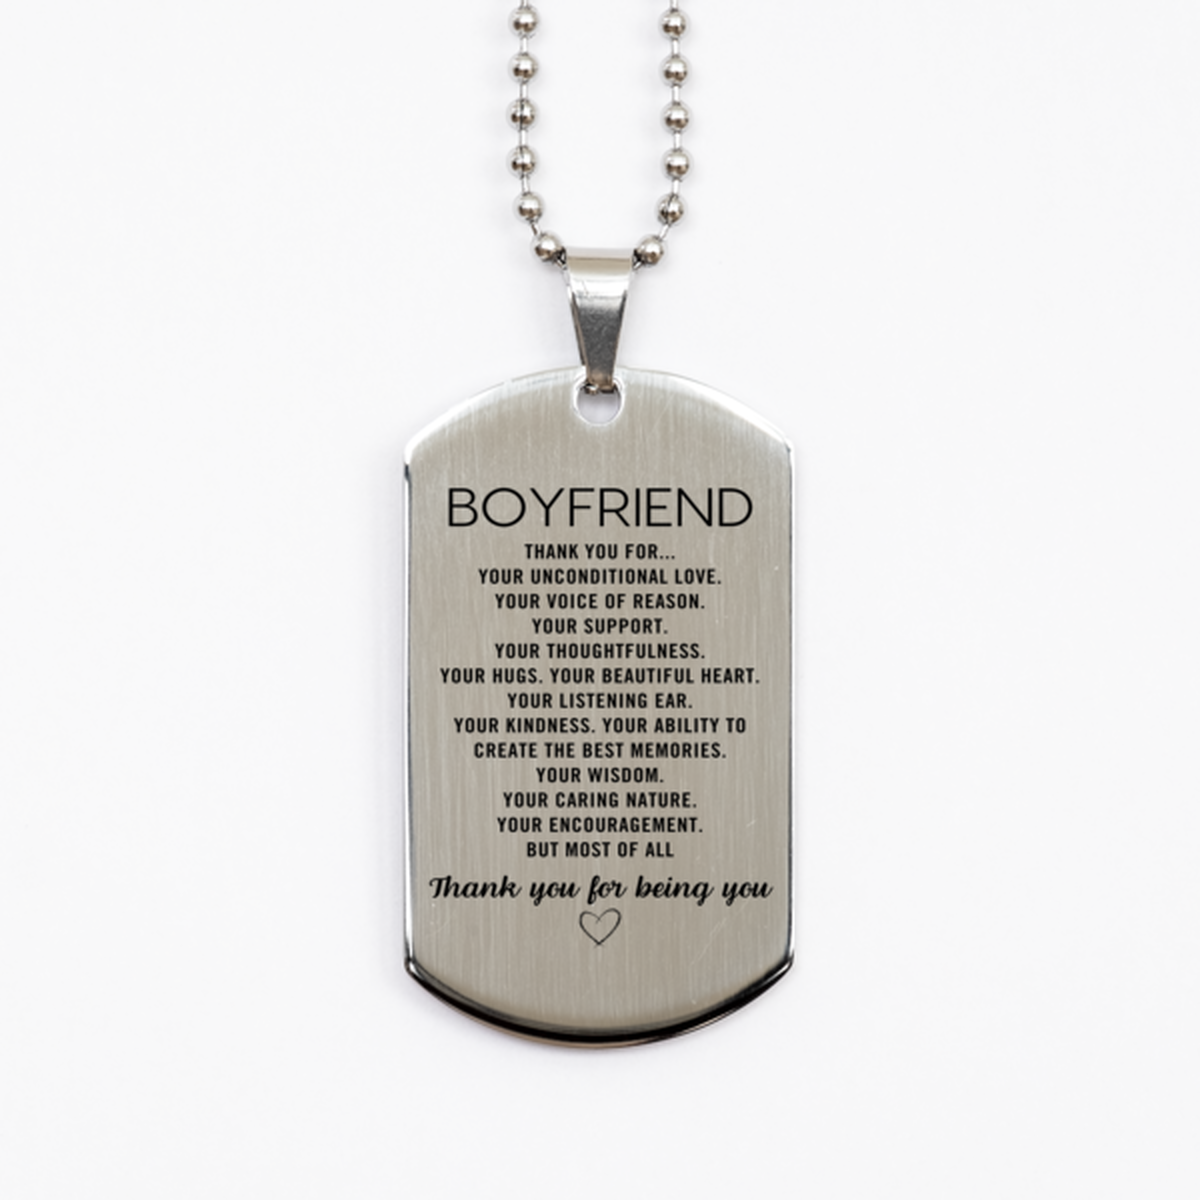 Boyfriend Silver Dog Tag Custom, Engraved Gifts For Boyfriend Christmas Graduation Birthday Gifts for Men Women Boyfriend Thank you for Your unconditional love